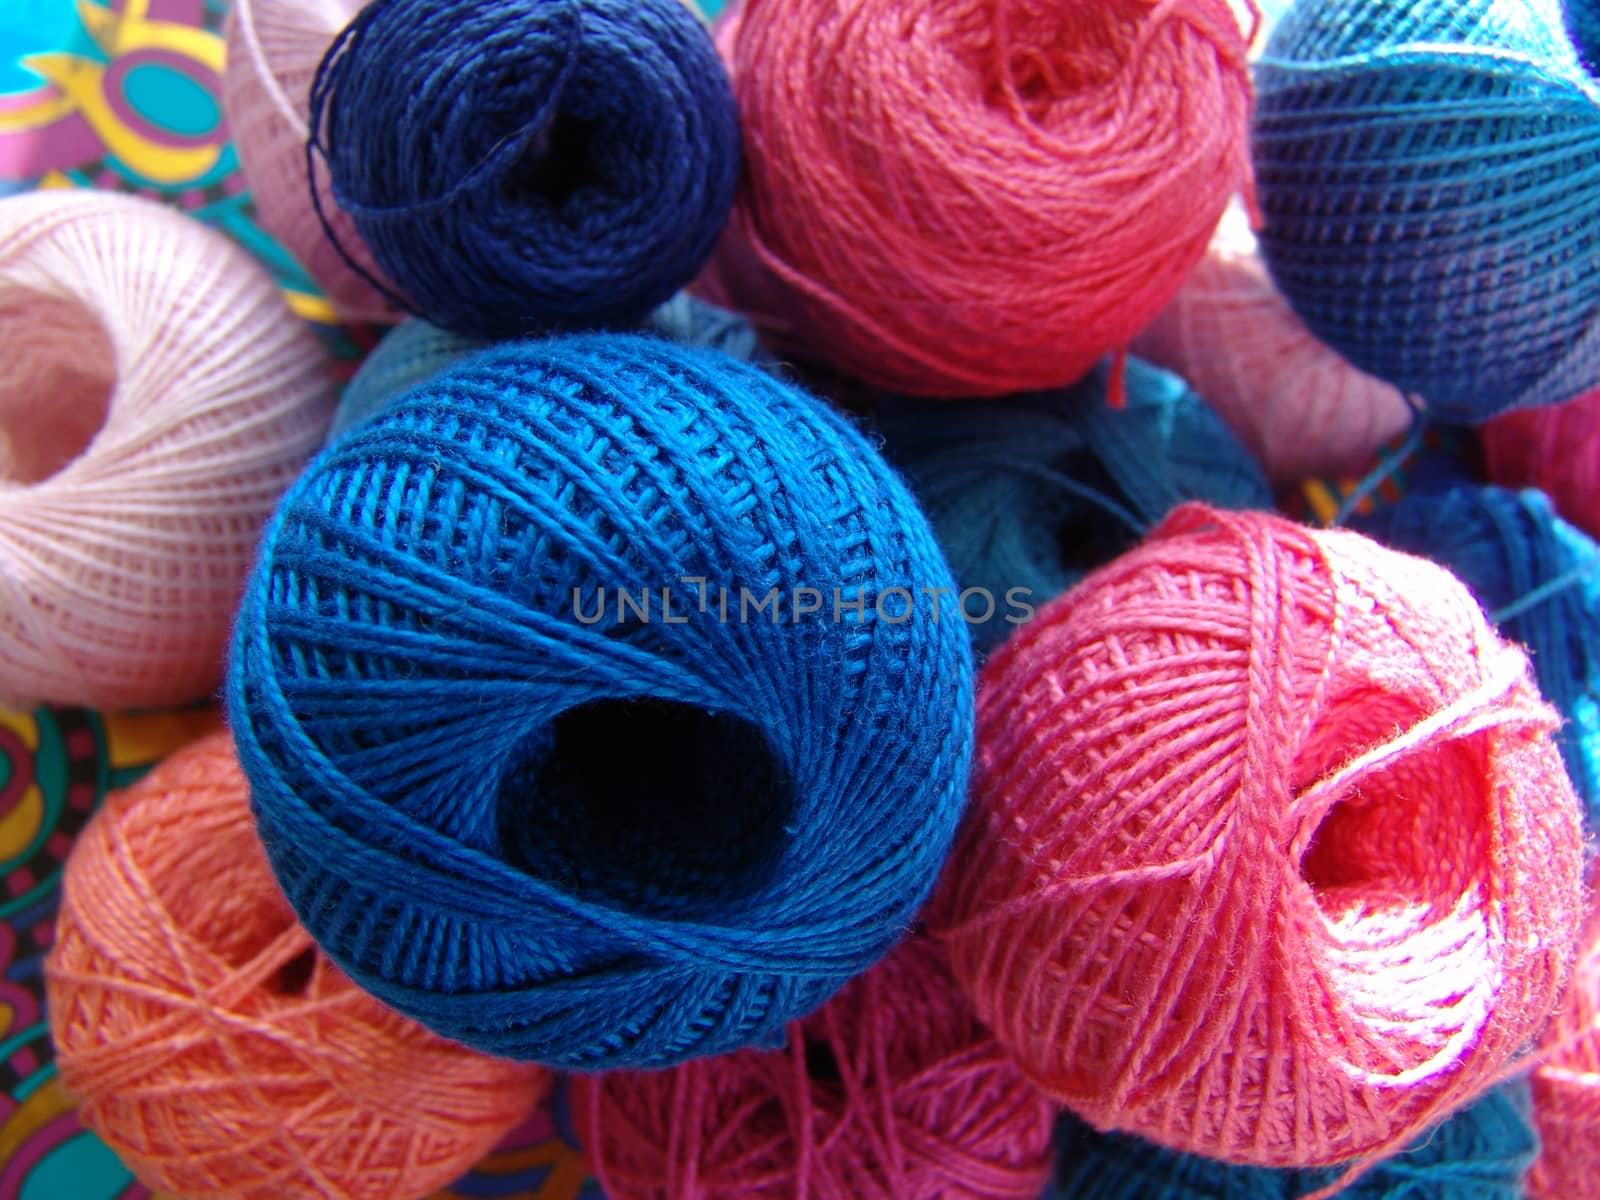 Colored balls of yarn.